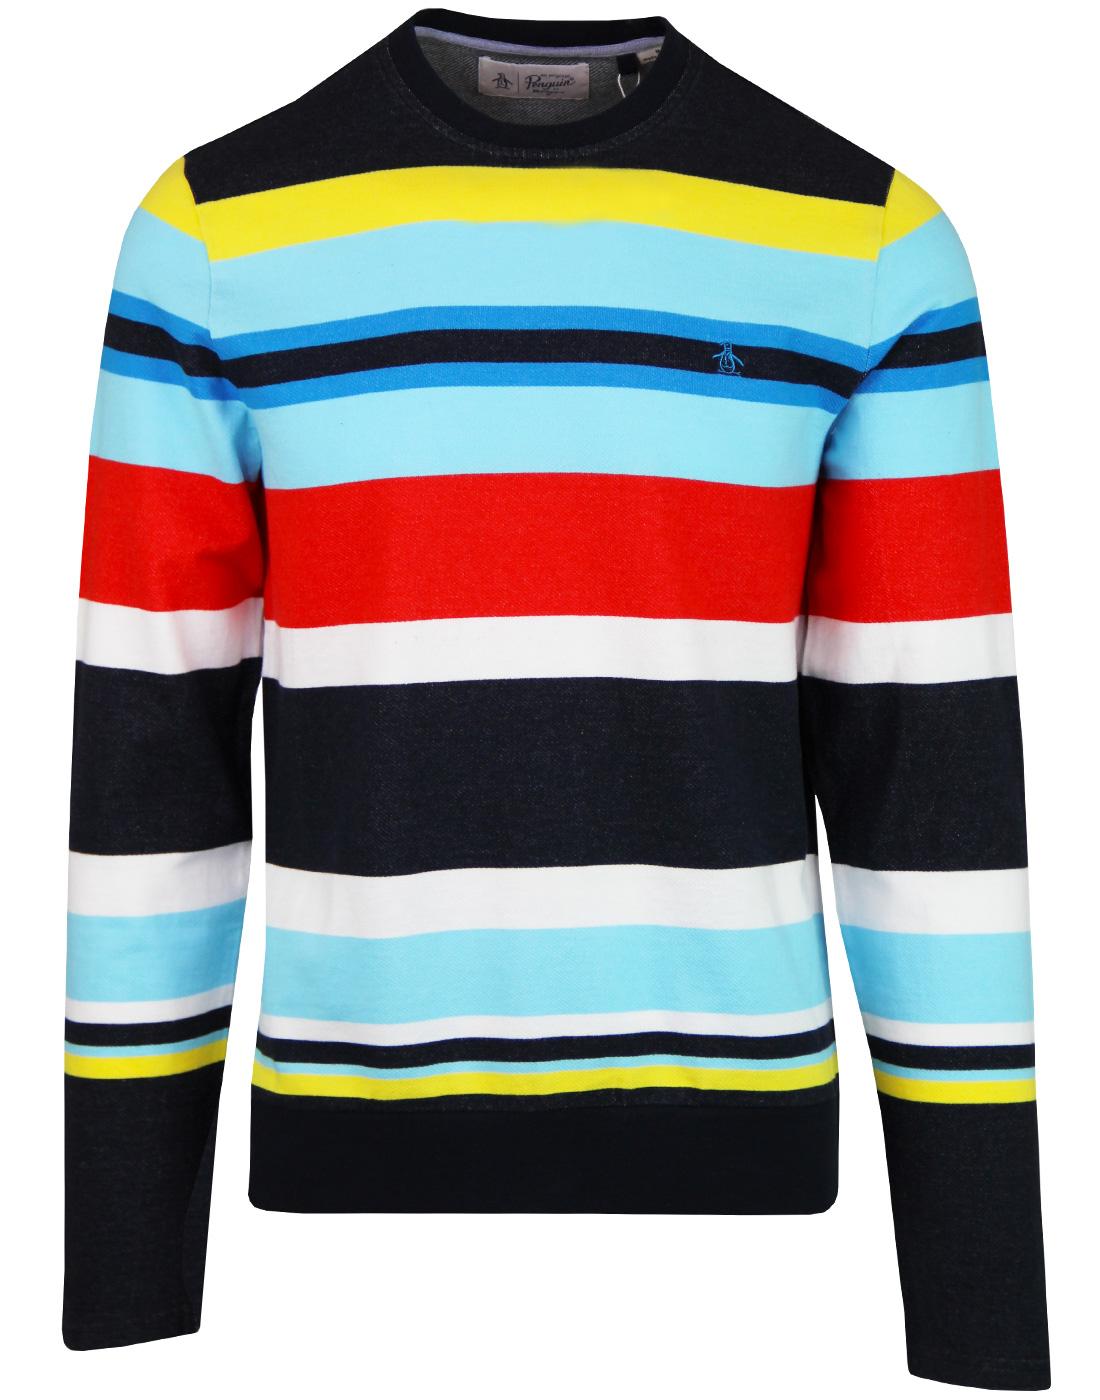 ORIGINAL PENGUIN Retro 70s Stripe Terry Sweatshirt